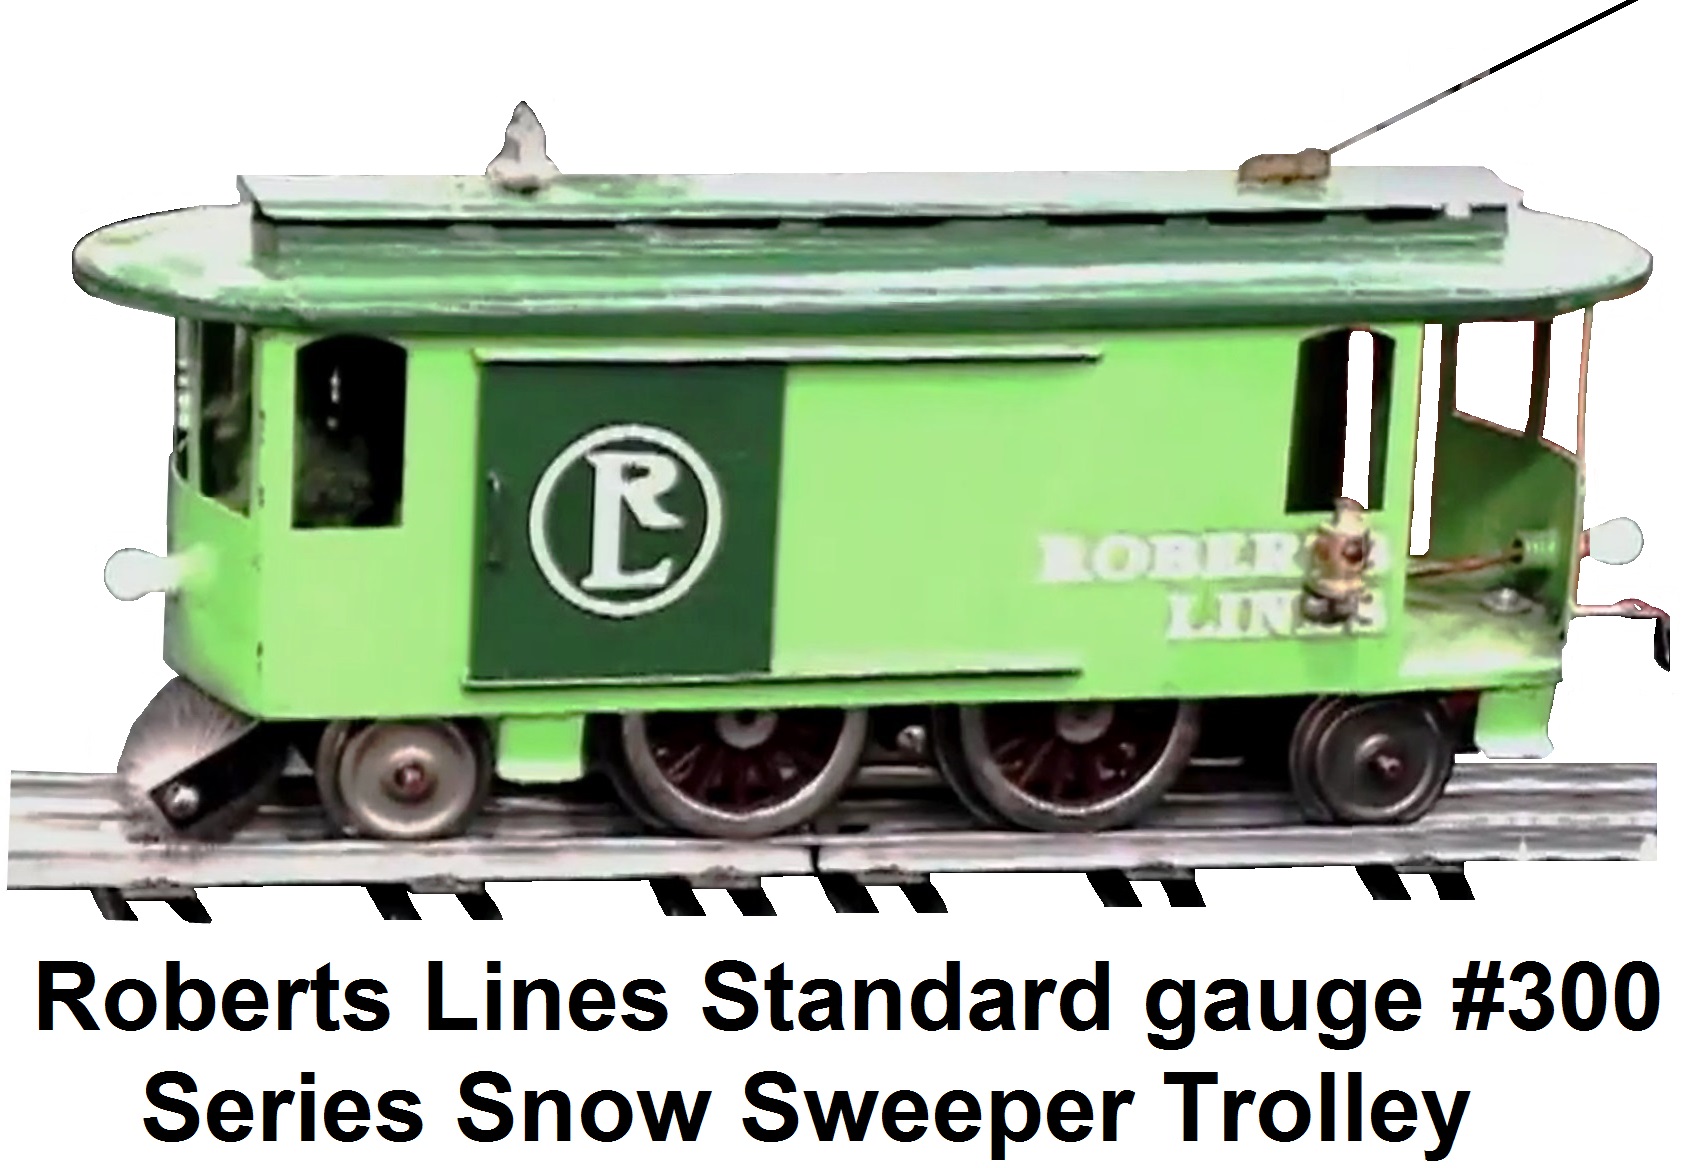 Roberts' Lines Standard gauge #300 Snow Sweeper Trolley